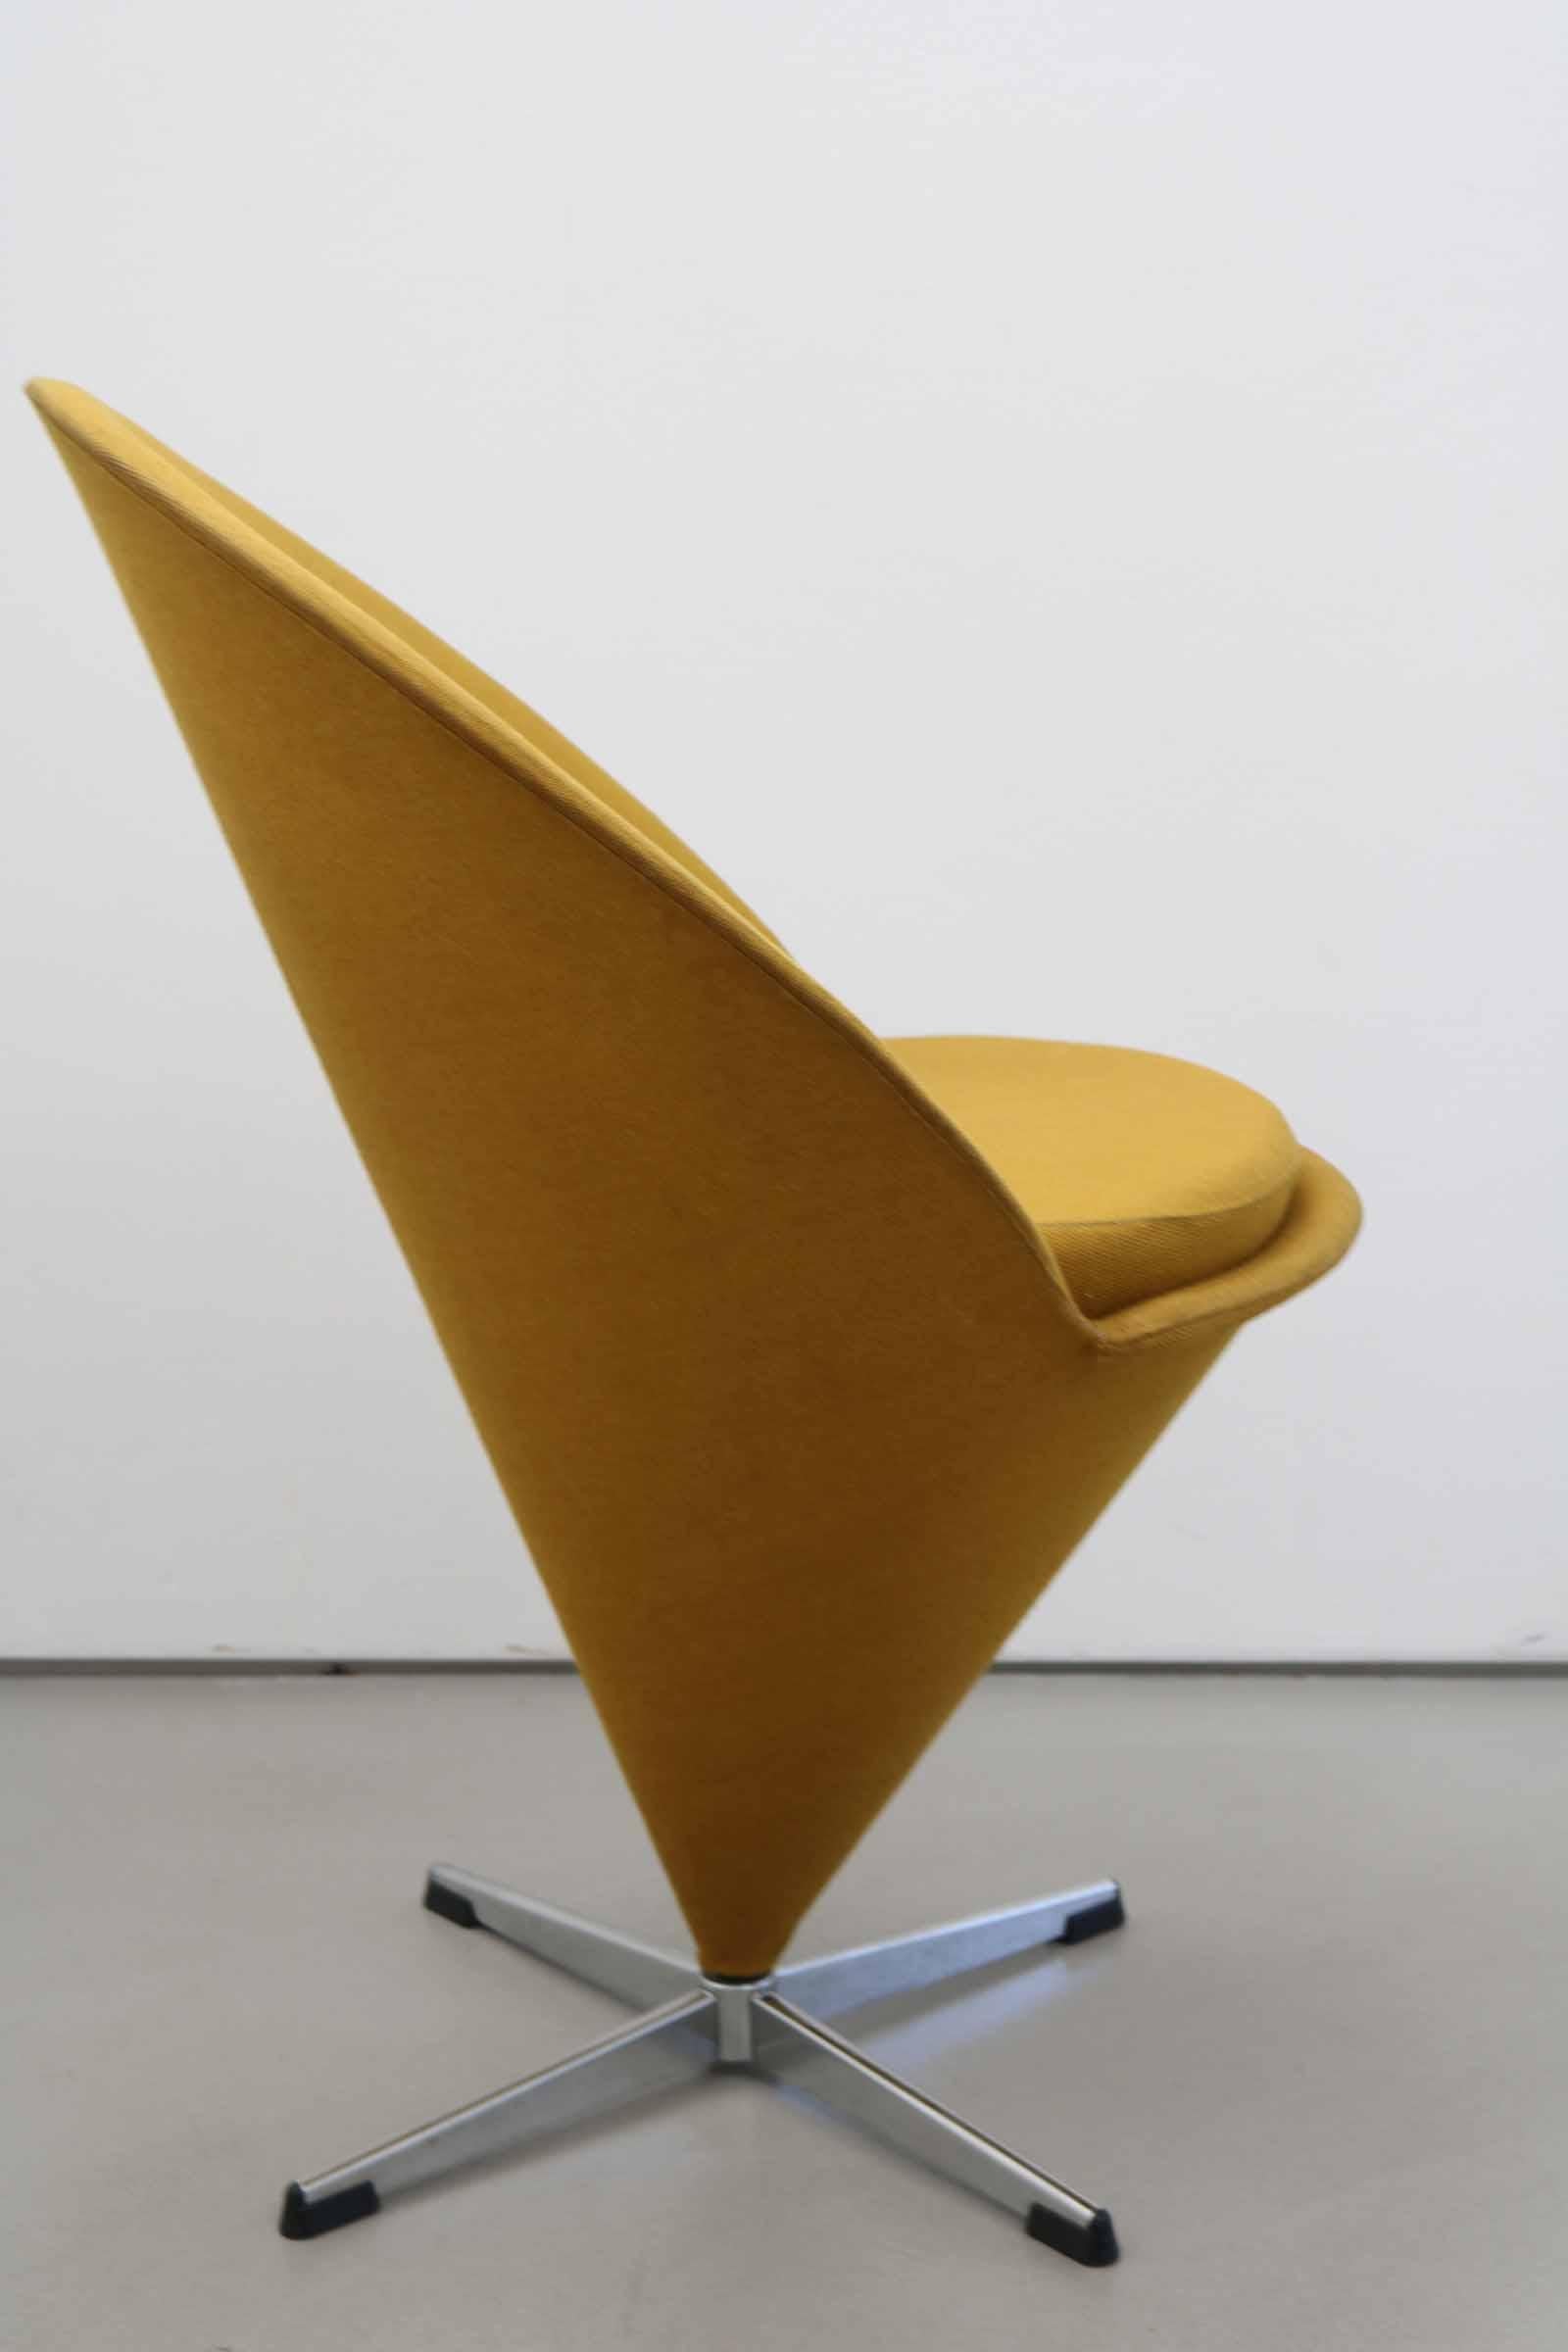 Mid-Century Modern Verner Panton Mustard Yellow Cone Chair in Original Fabric, Denmark, 1960s For Sale